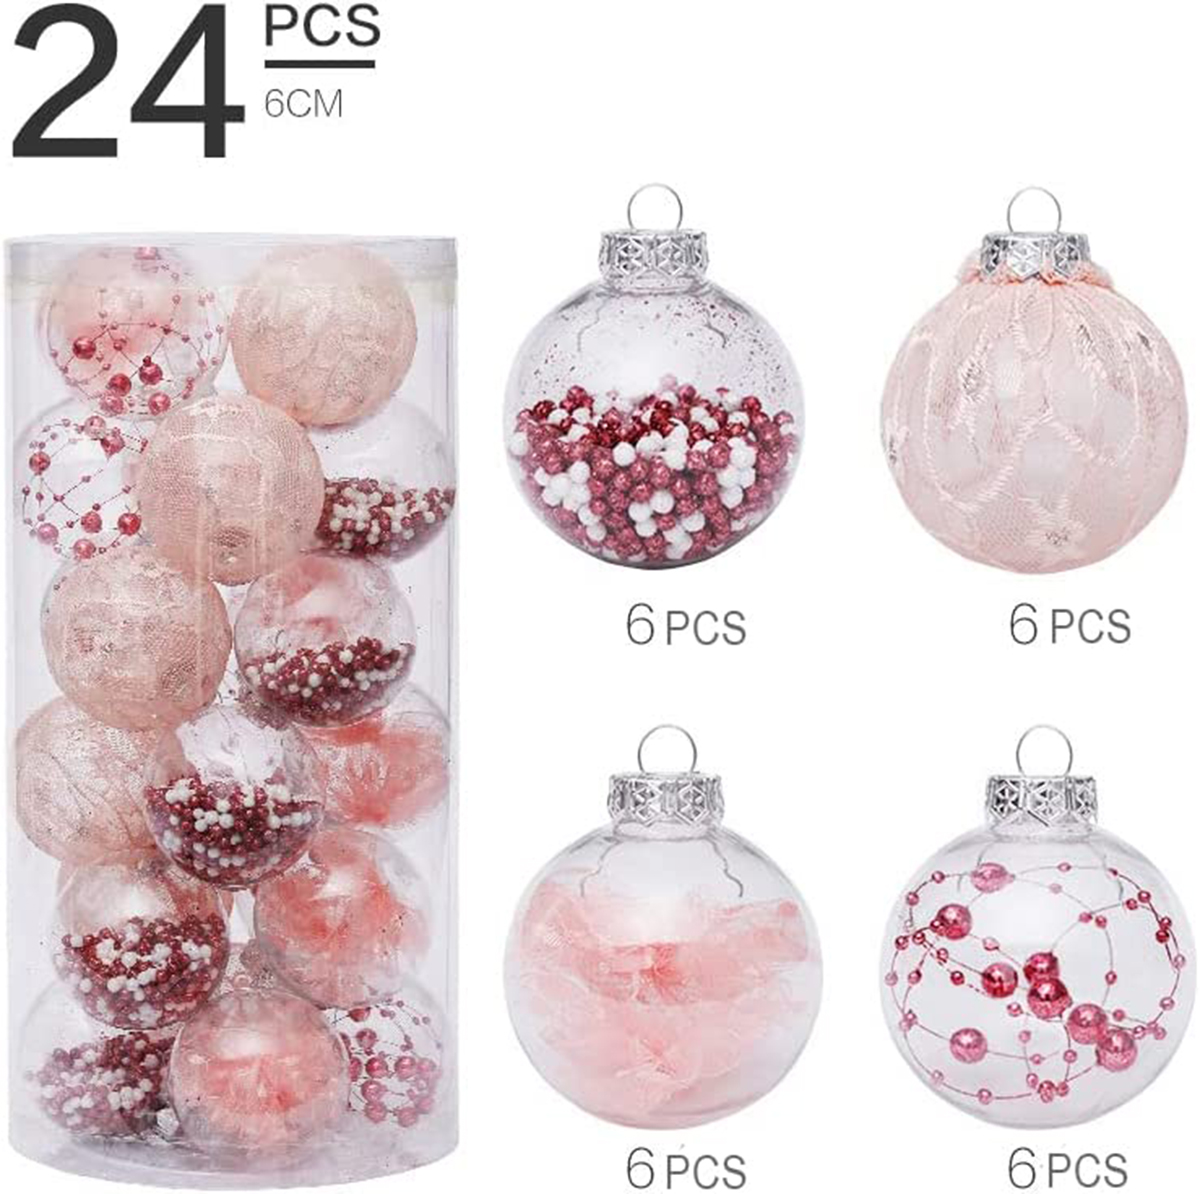 24 PCS Clear Christmas Ball Ornaments 6CM-Peach